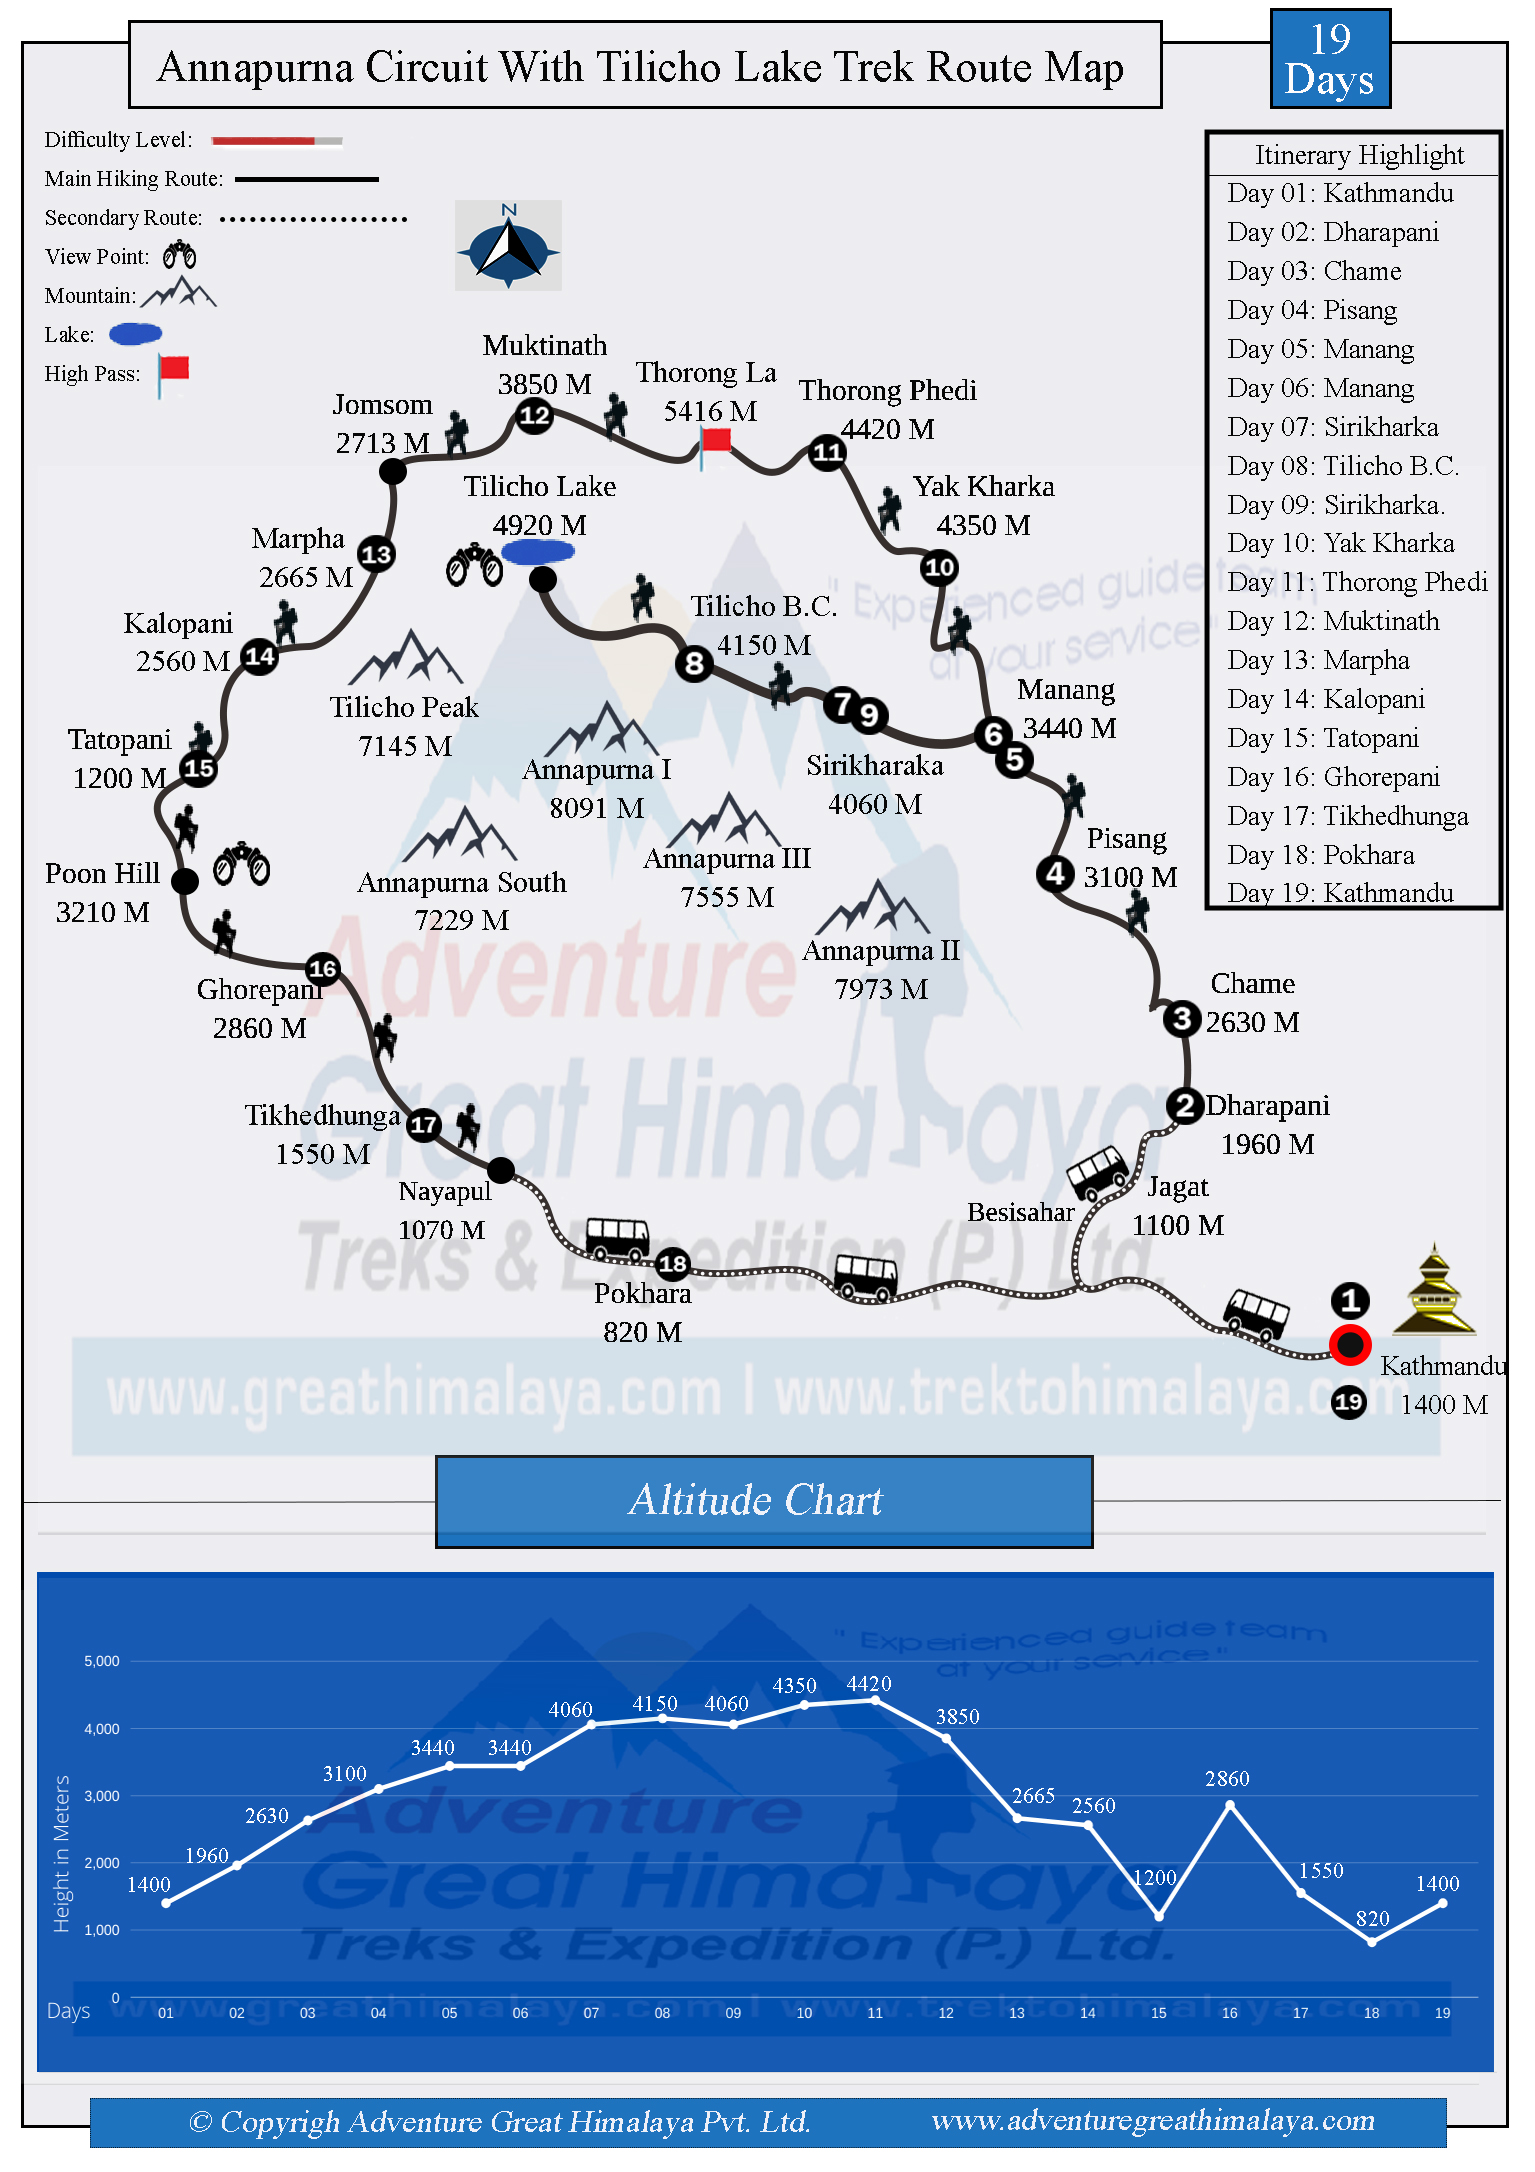 Betekenisvol Bestuurbaar Doen Annapurna Circuit With Tilicho Lake Trekking- 20 Days